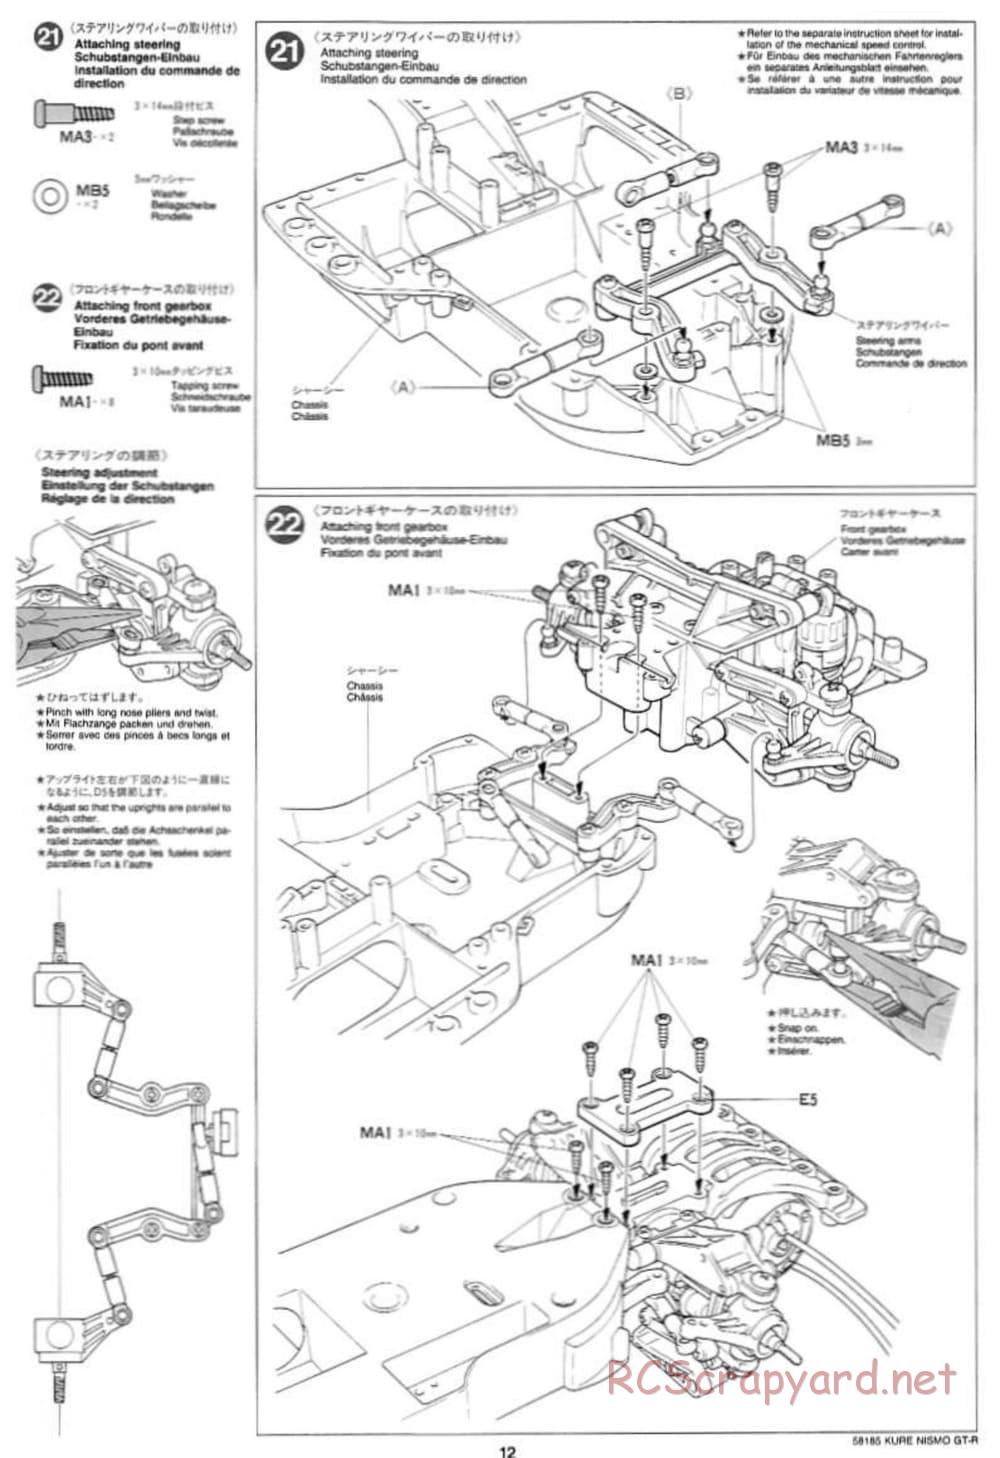 Tamiya - Kure Nismo GT-R - TA-03F Chassis - Manual - Page 12